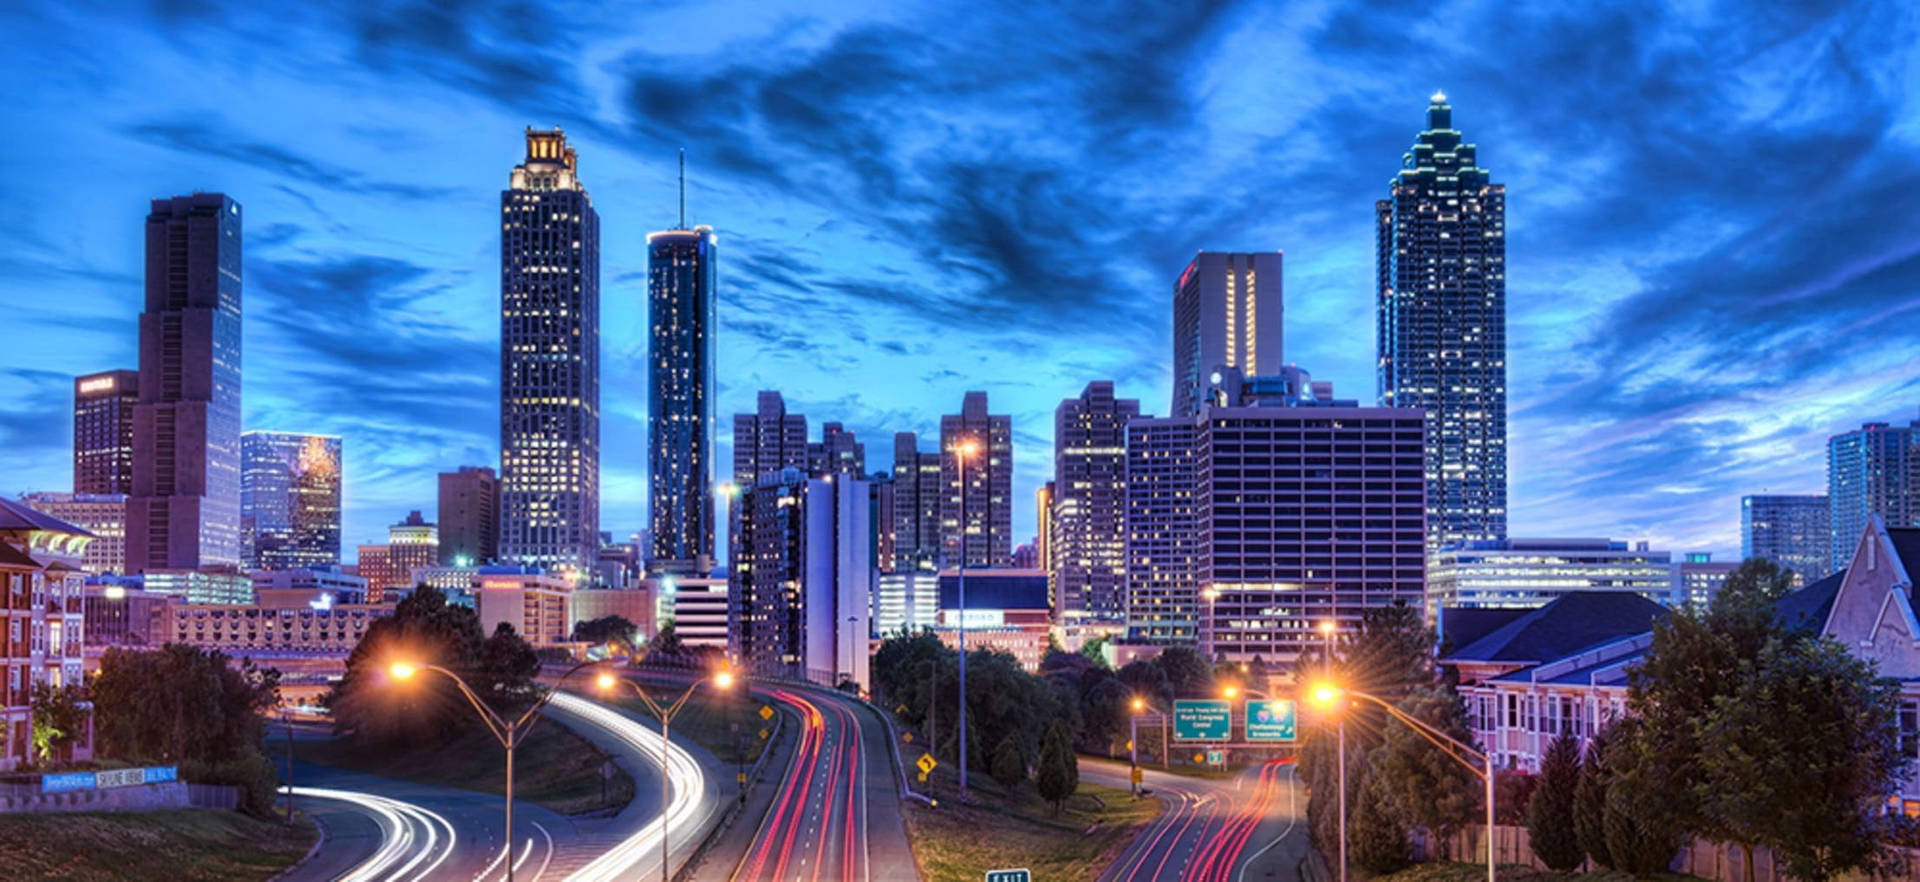 Atlanta Georgia City Lights